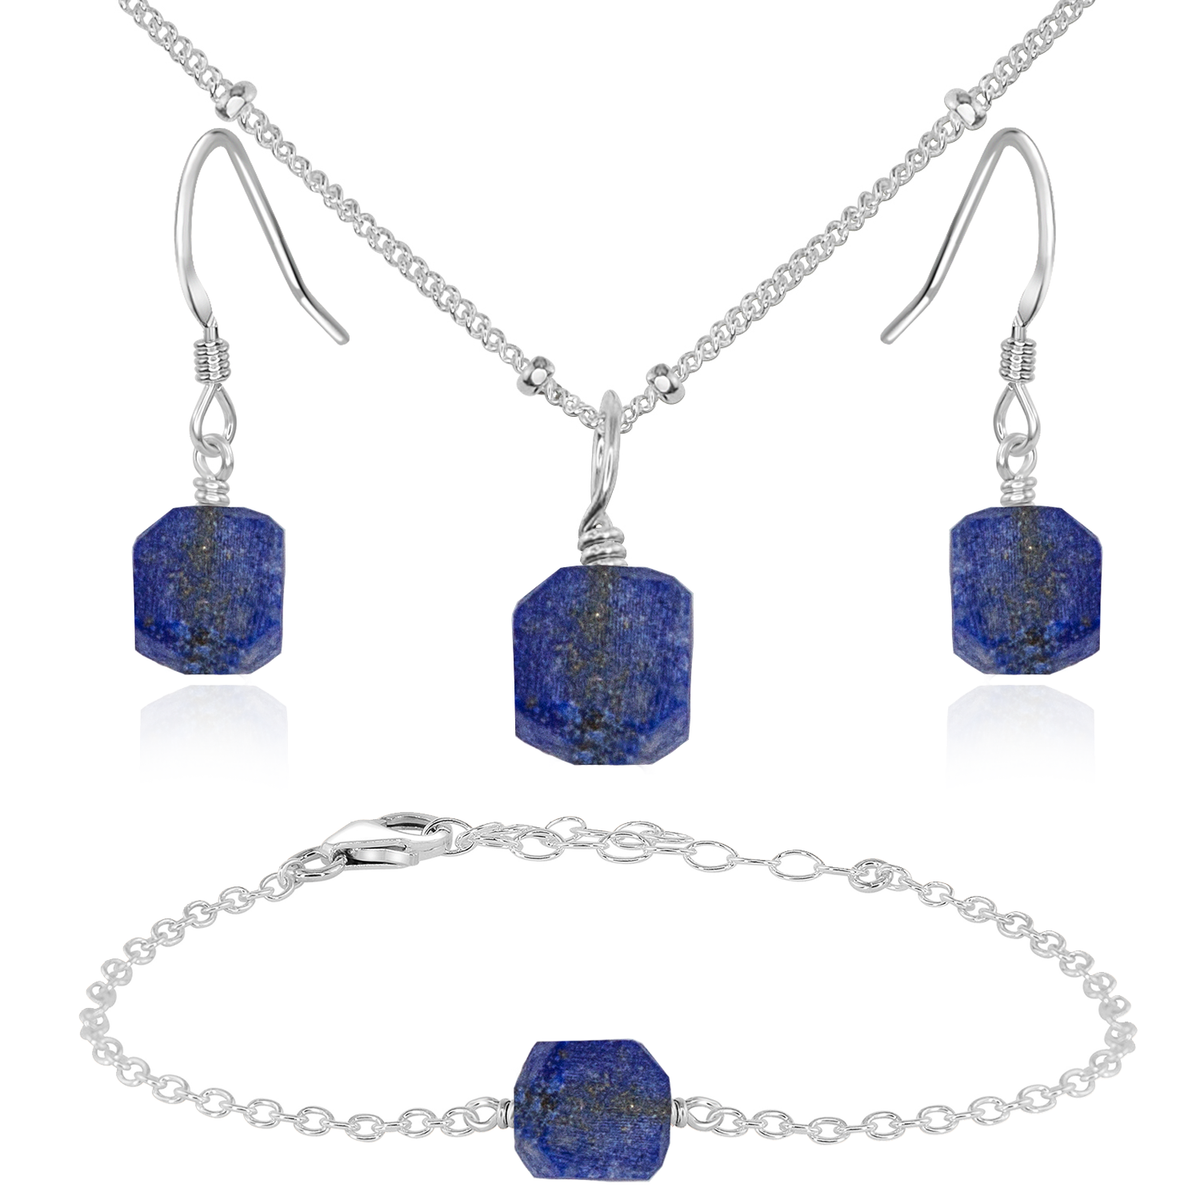 Raw Lapis Lazuli Crystal Jewellery Set - Raw Lapis Lazuli Crystal Jewellery Set - Sterling Silver / Satellite / Necklace & Earrings & Bracelet - Luna Tide Handmade Crystal Jewellery